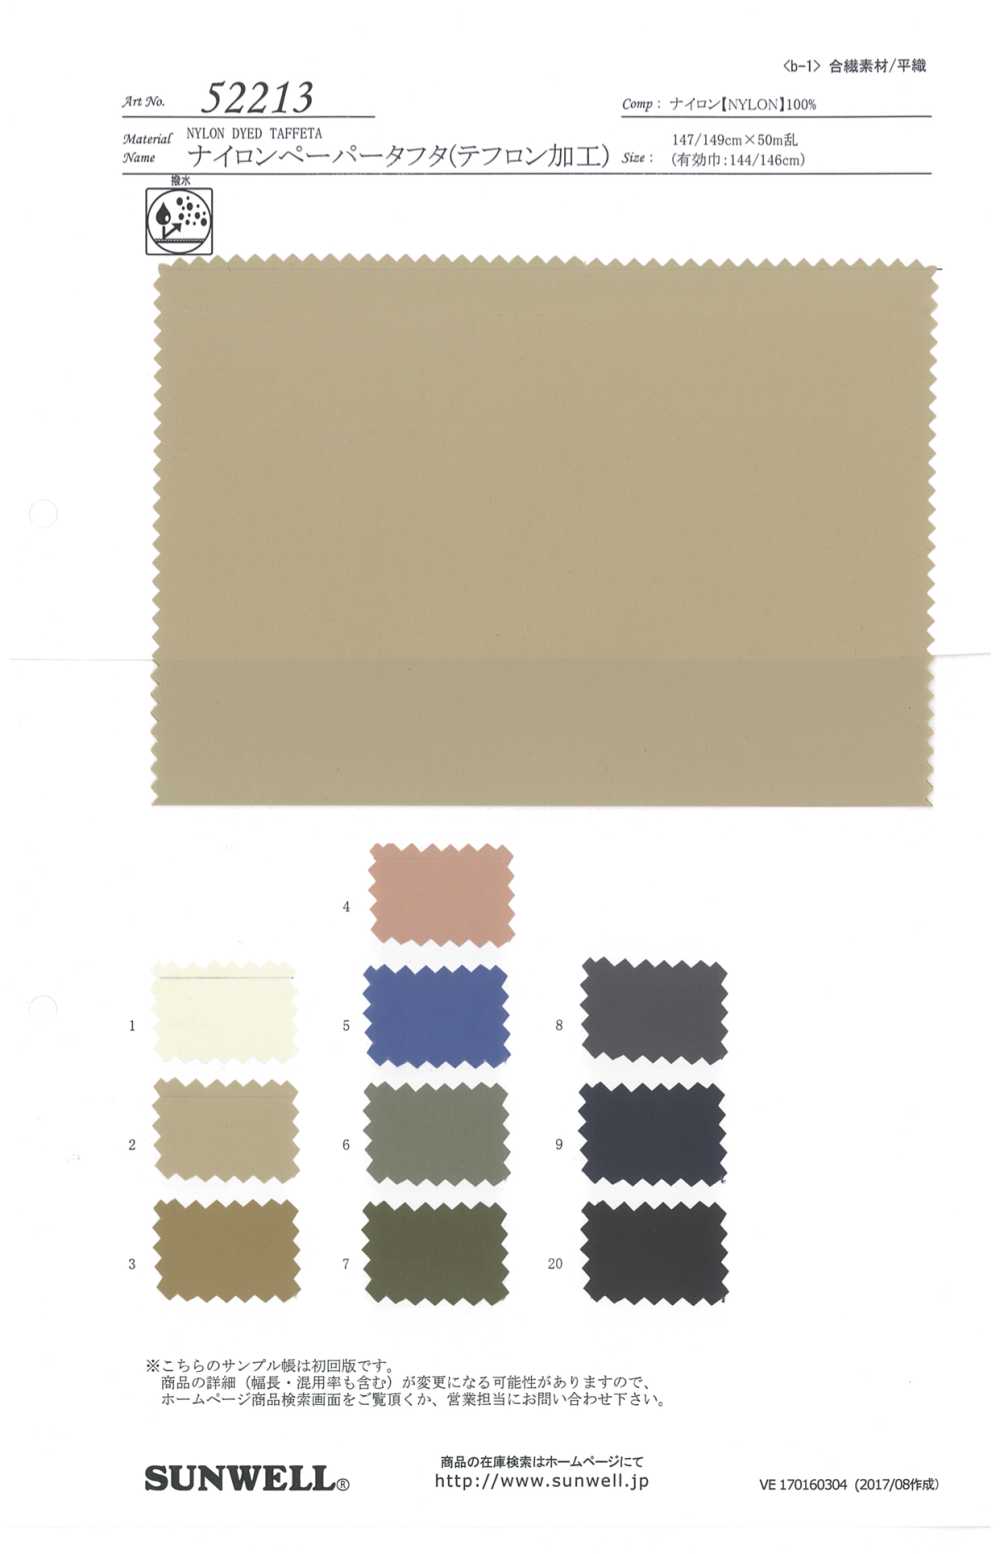 52213 [OUTLET] Nylon Paper Taffeta (Teflon Processing)[Textile / Fabric] SUNWELL